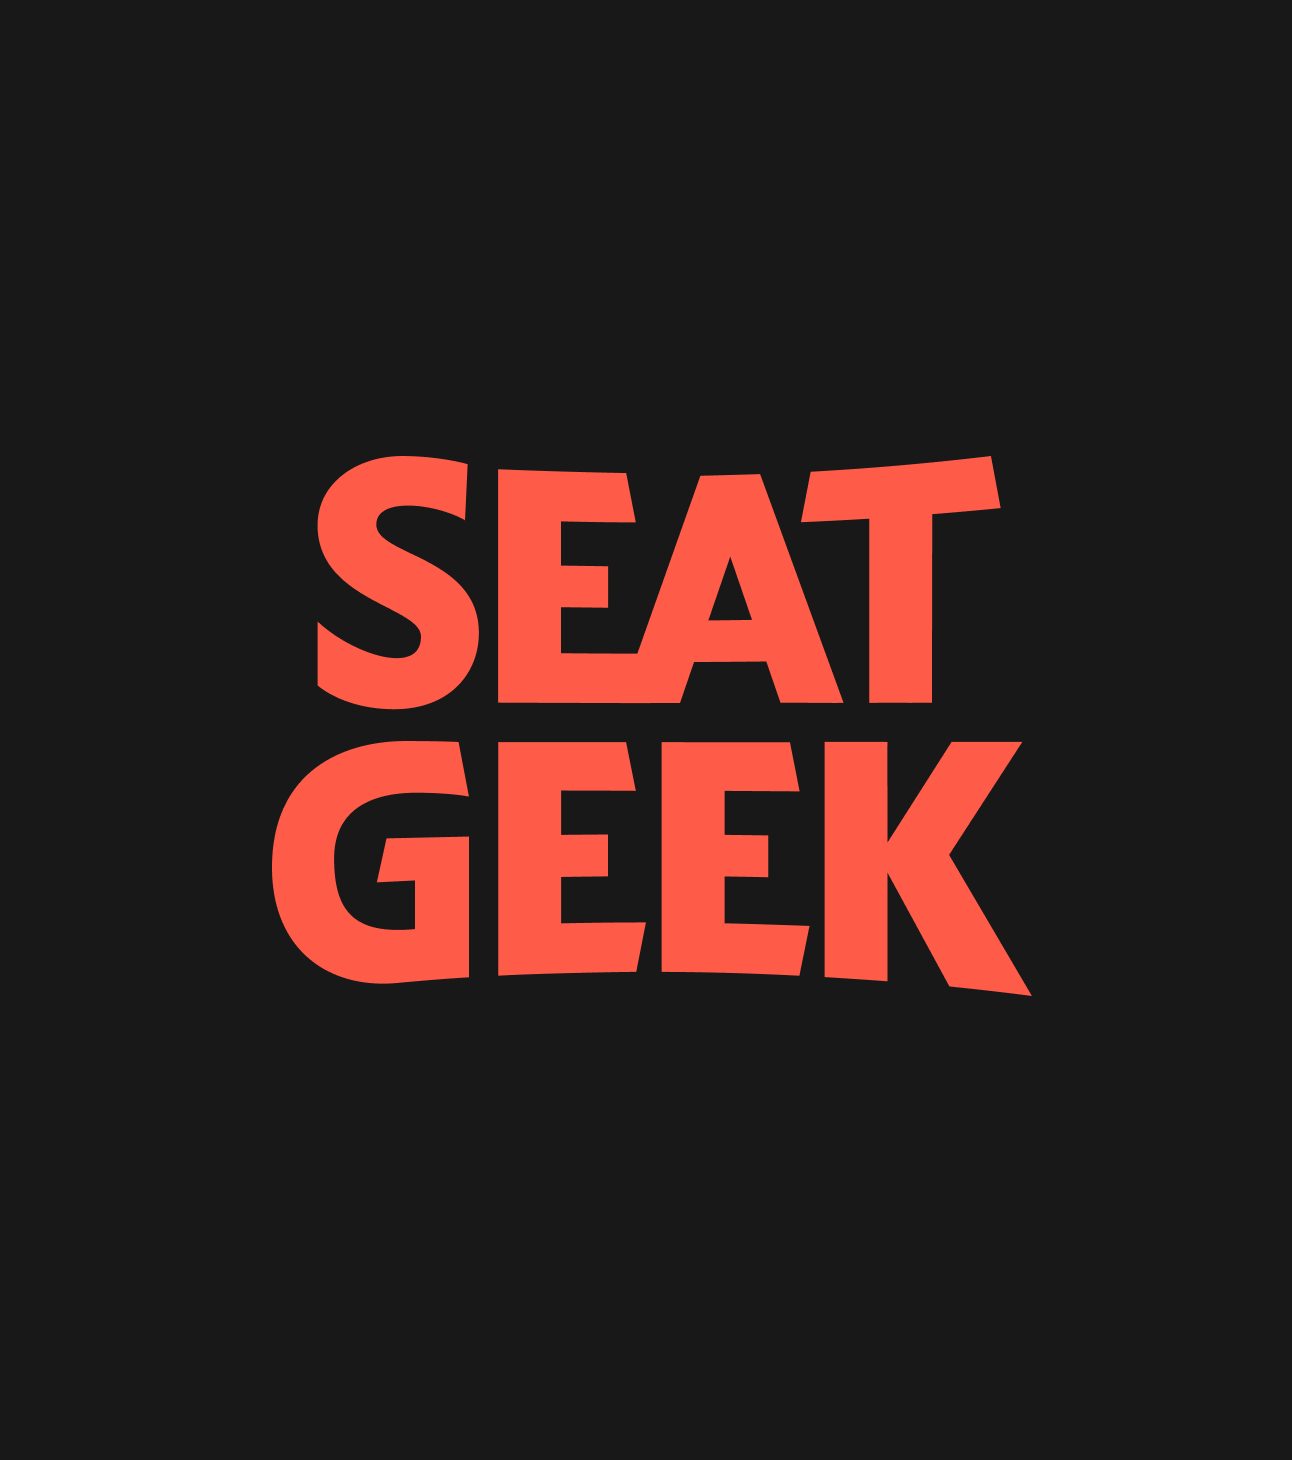 Seat Greek: The New Way to Enjoy Live Entertainment